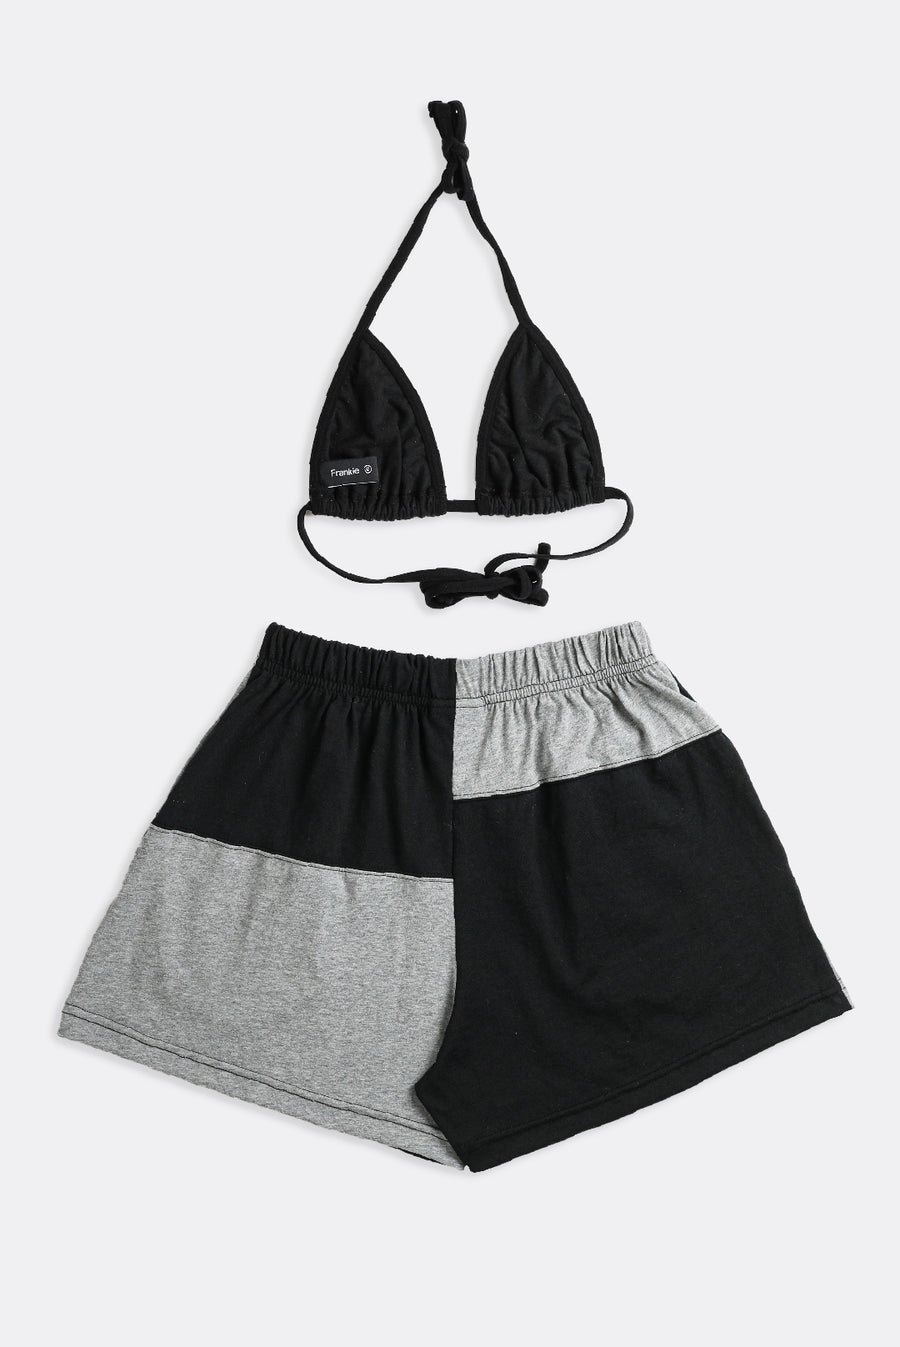 Rework Nike Patchwork Tee Shorts Set - XS